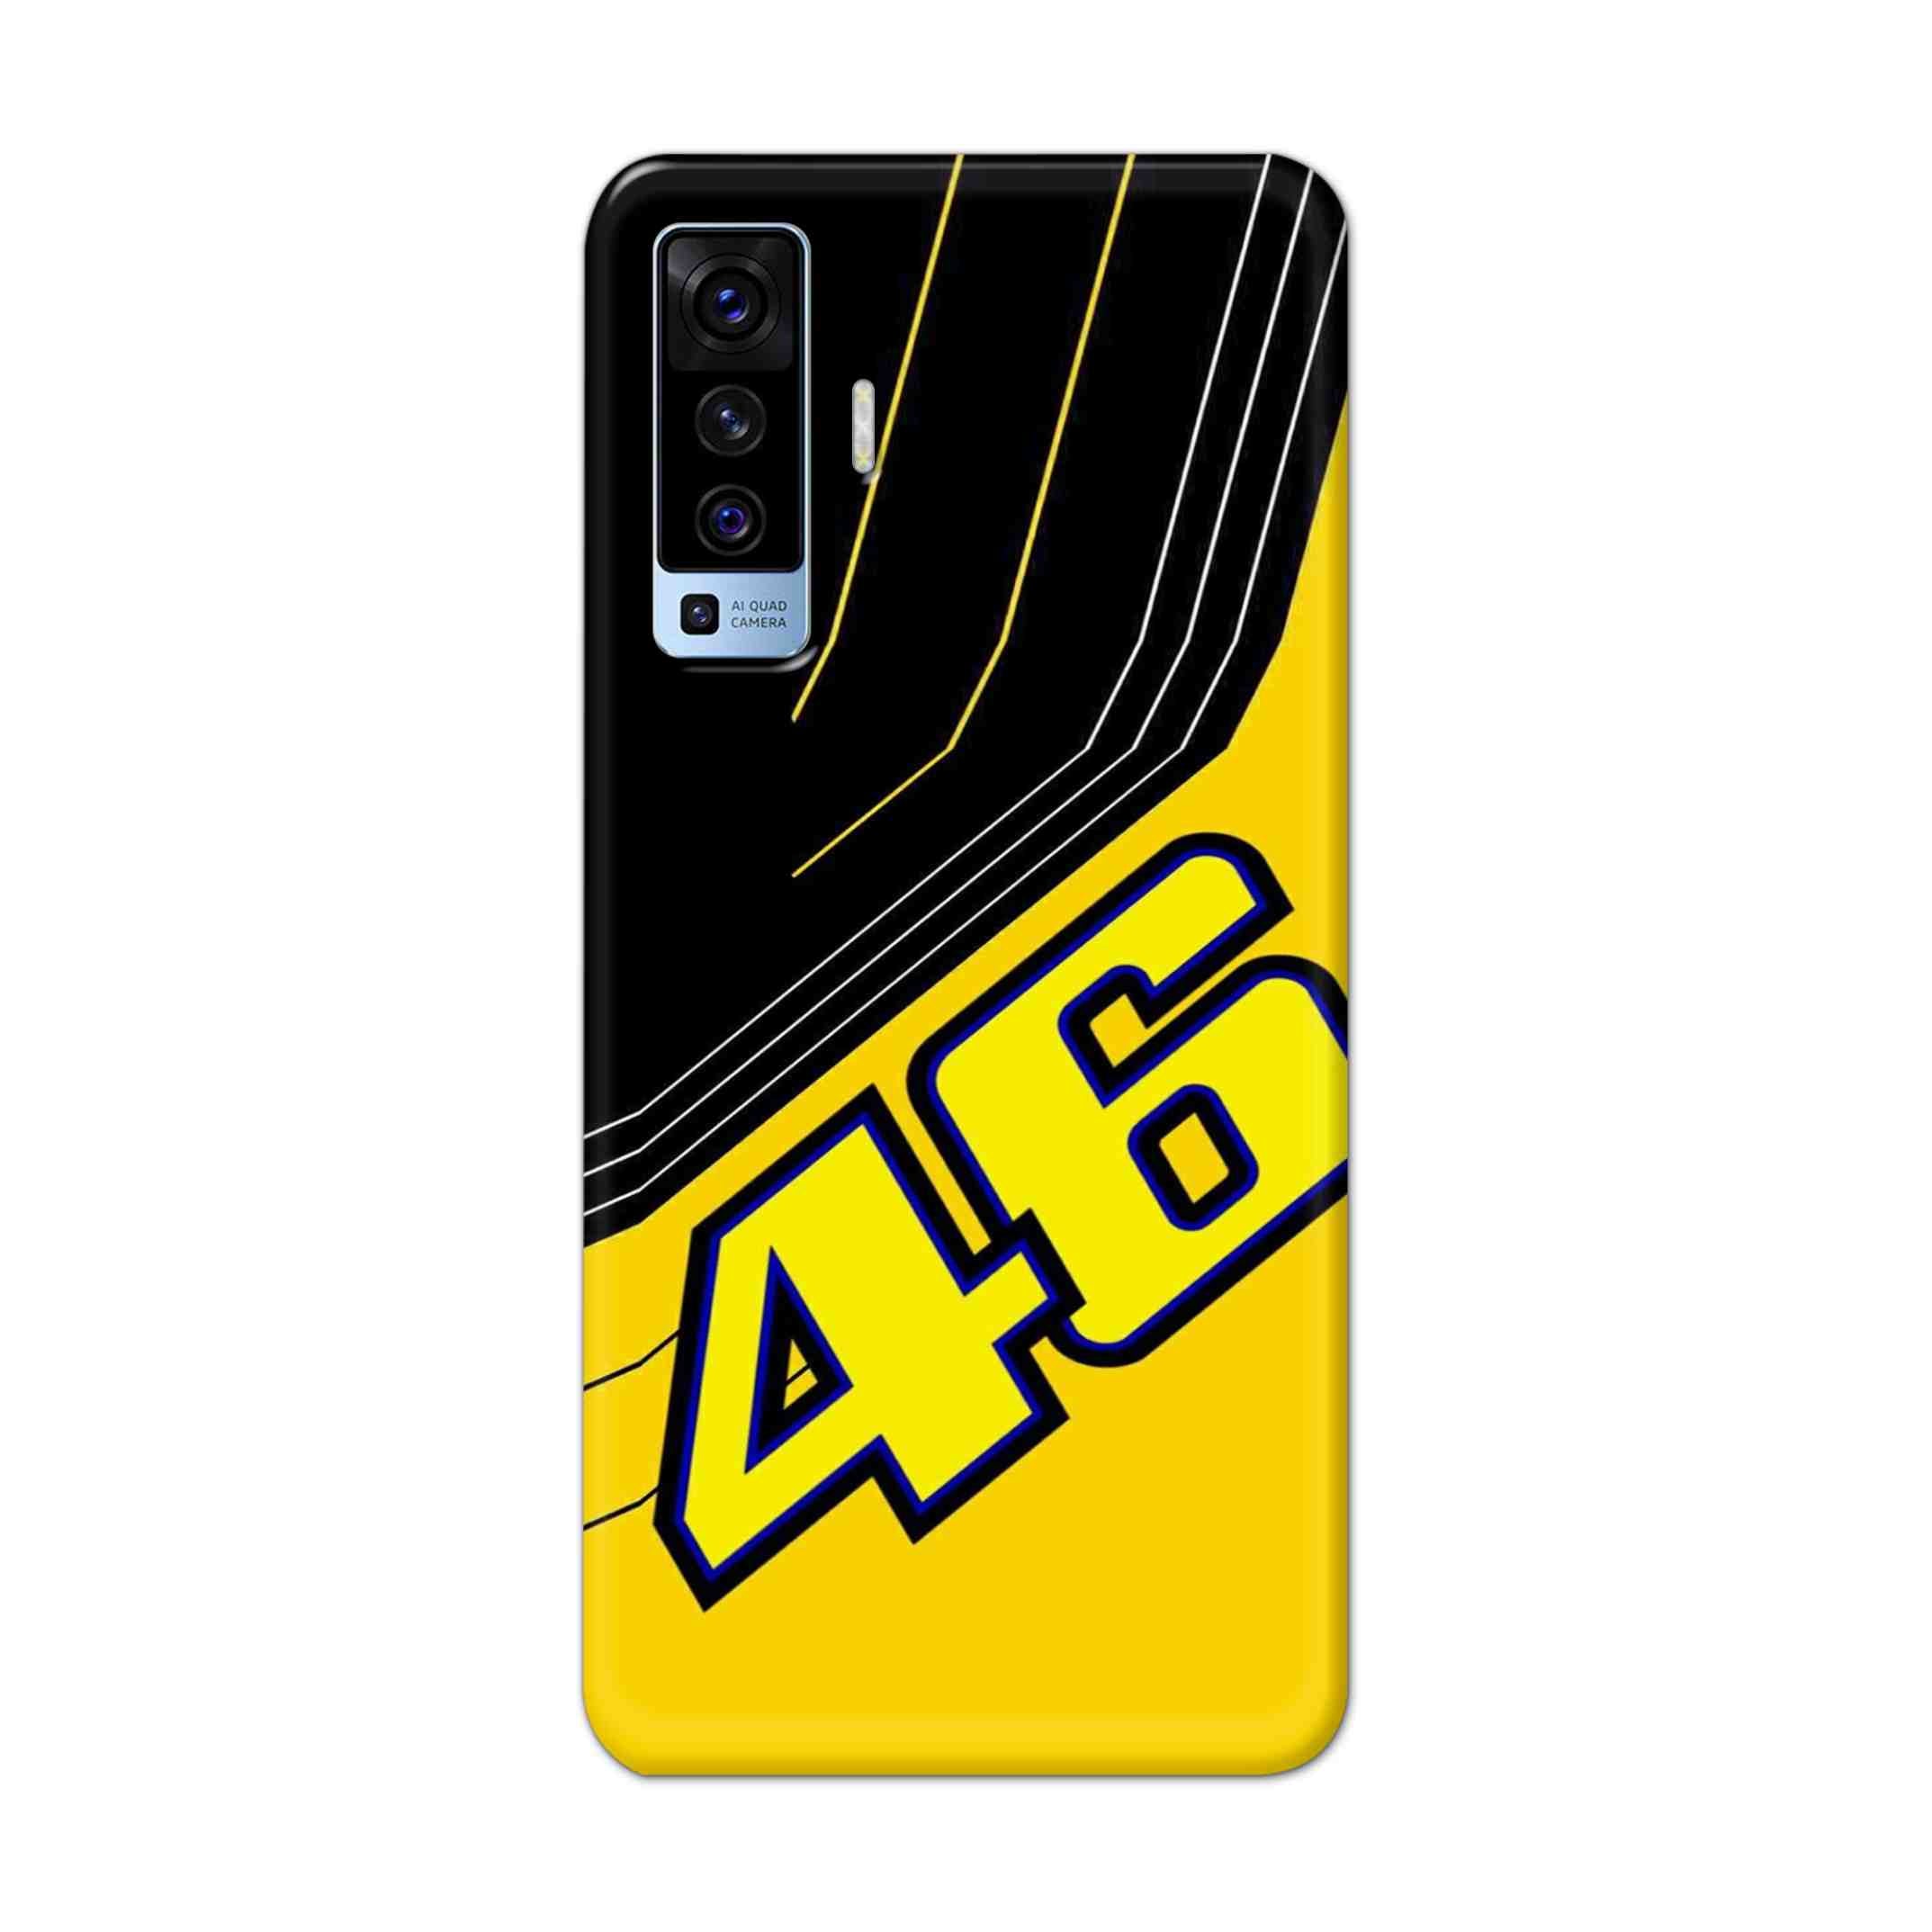 Buy 46 Hard Back Mobile Phone Case Cover For Vivo X50 Online